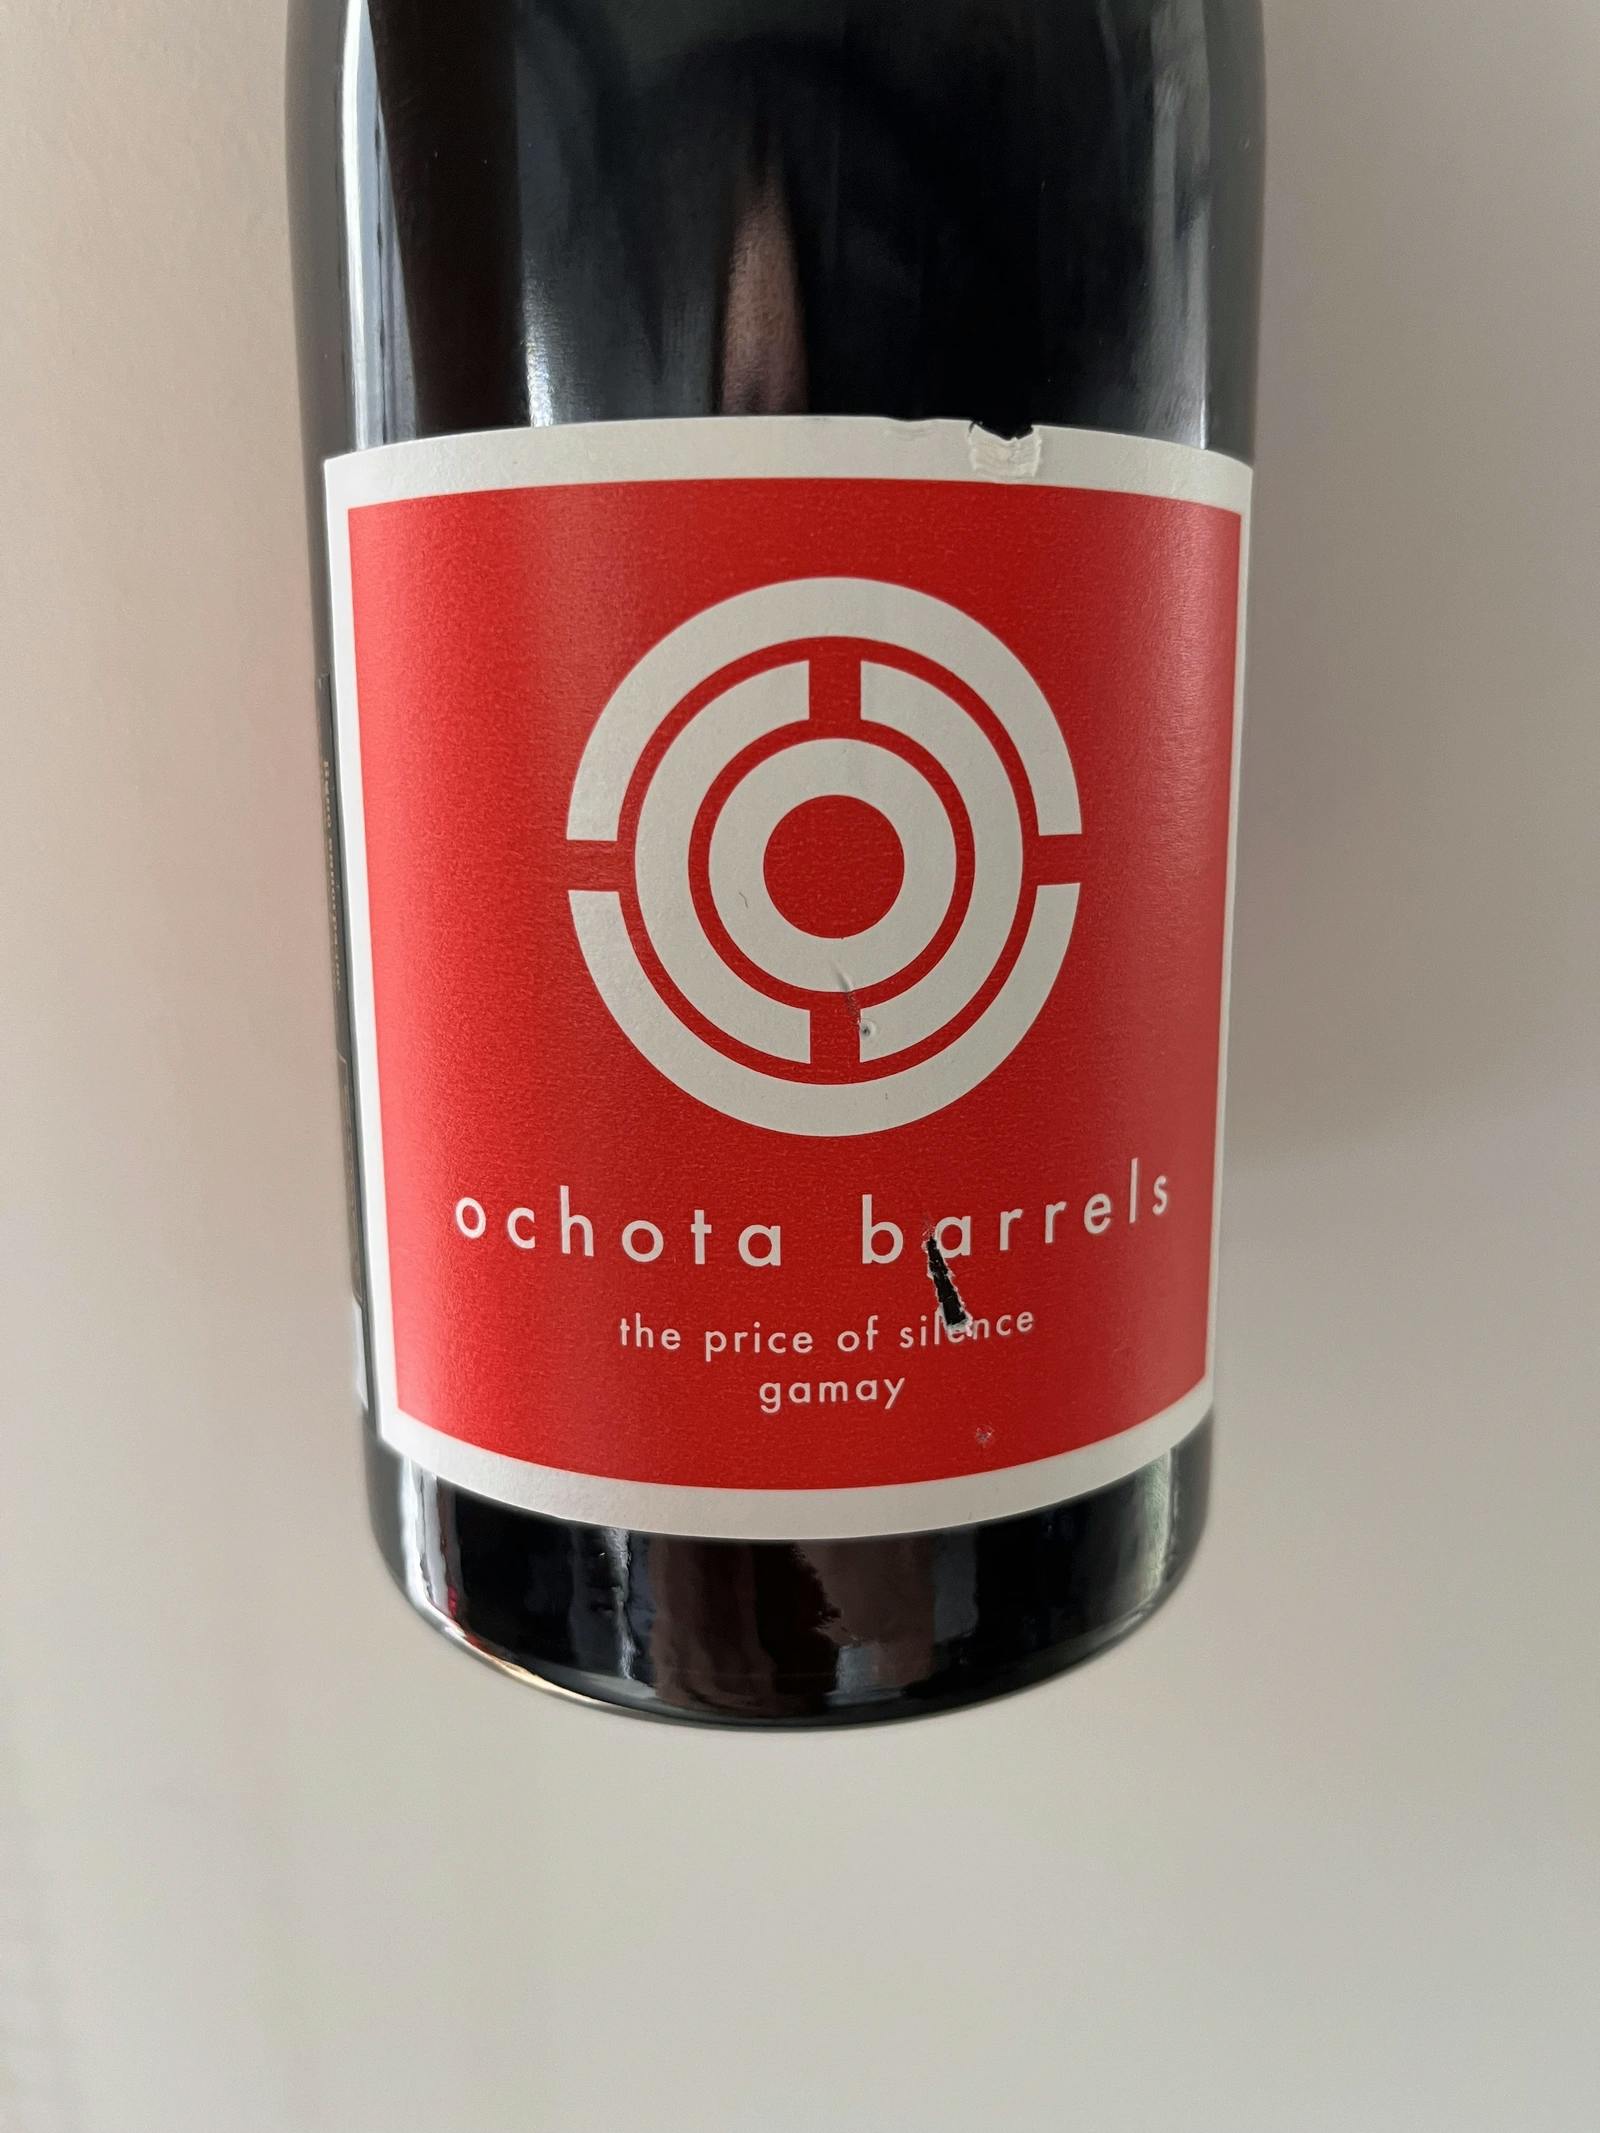 Ochota barrels the price of silence gamay 2019